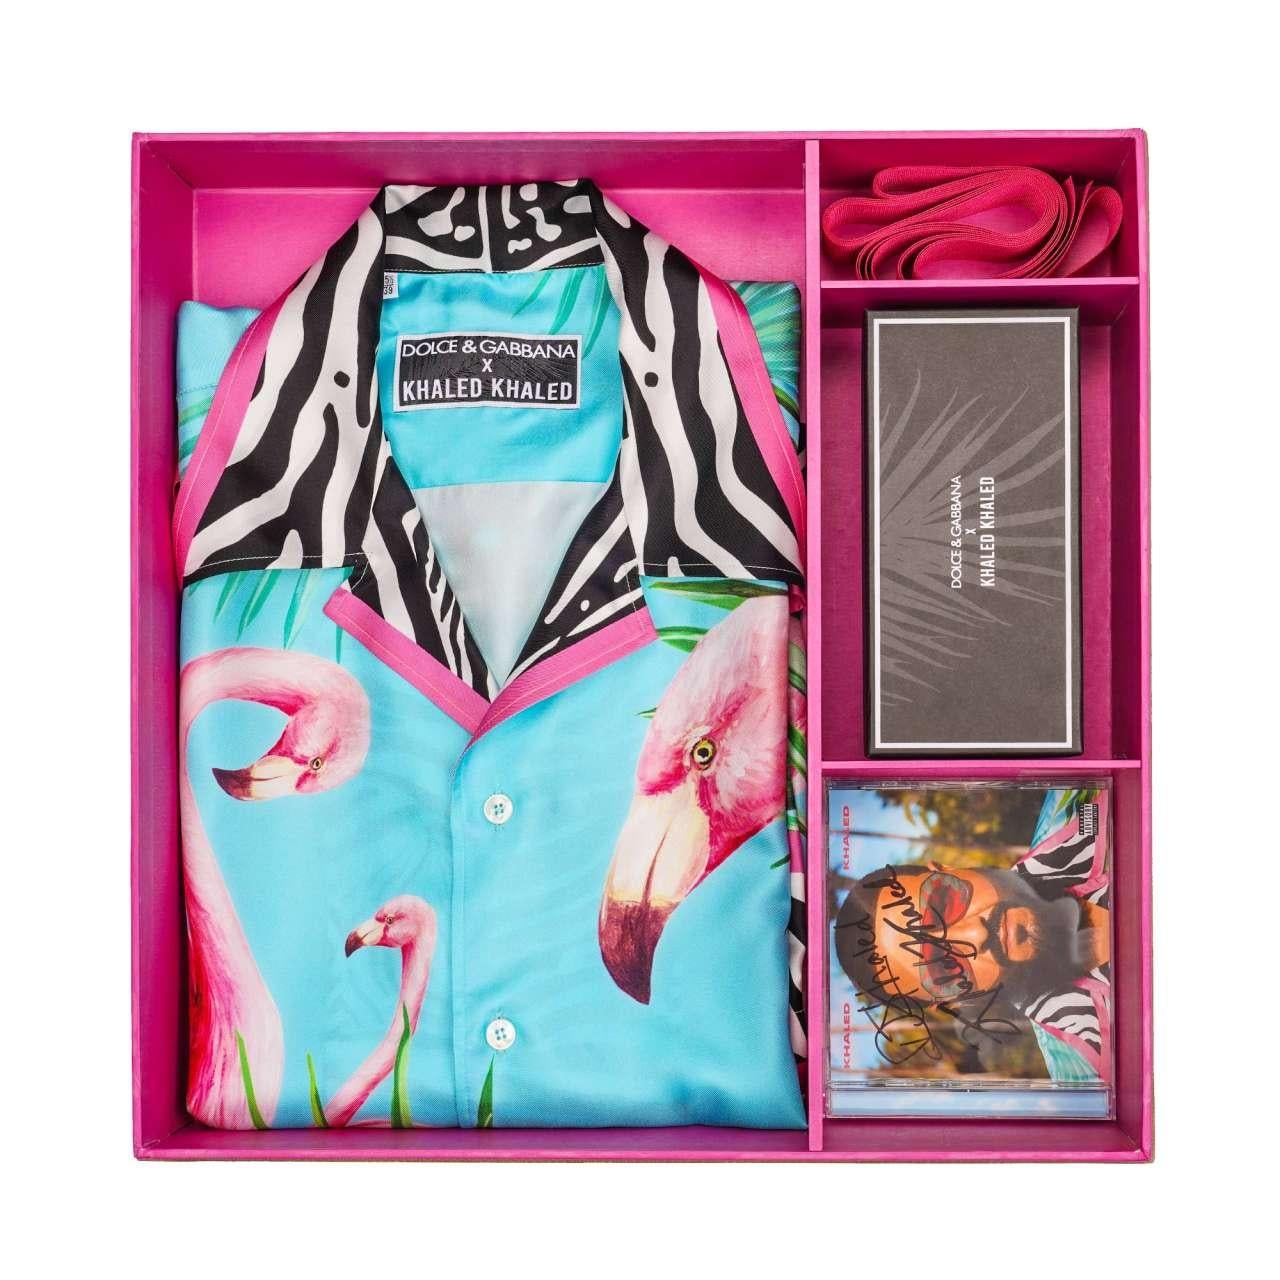 Dolce & Gabbana - DJ Khaled Silk Flamingo Zebra Shirt with Sunglasses and CD 41 For Sale 4